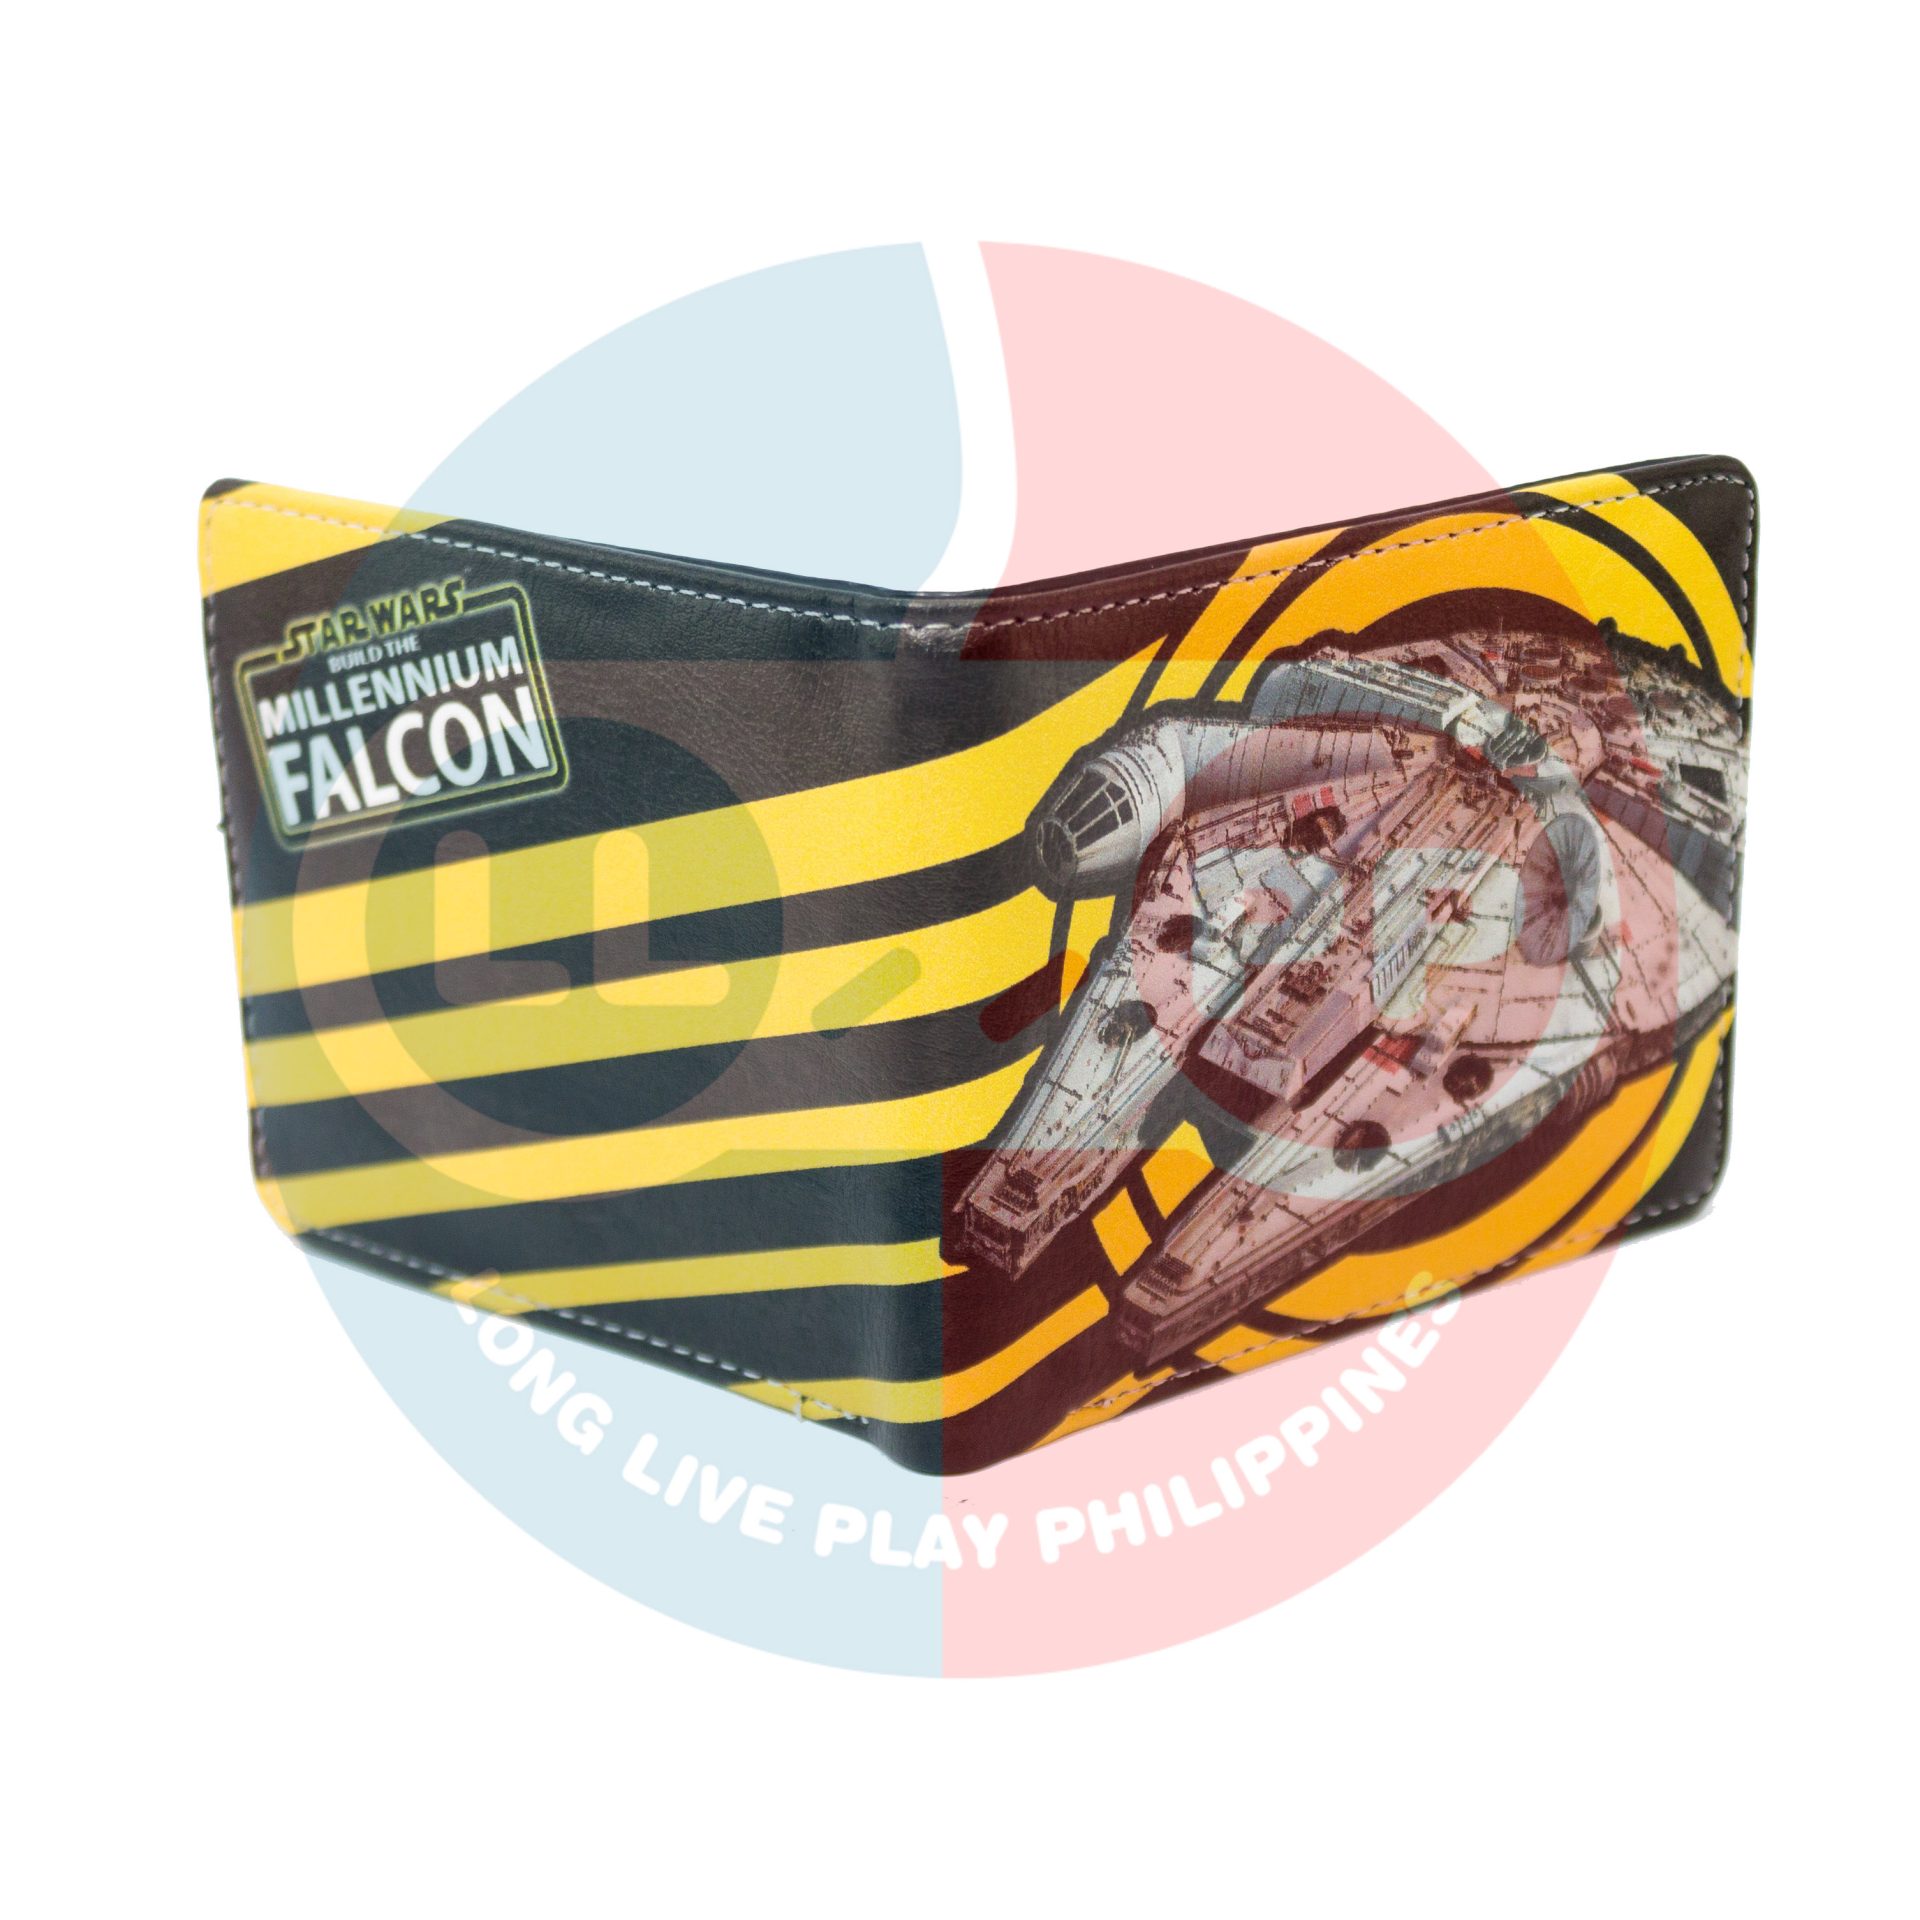 Millennium Falcon Wallet (Leather Wallet) (Star Wars)